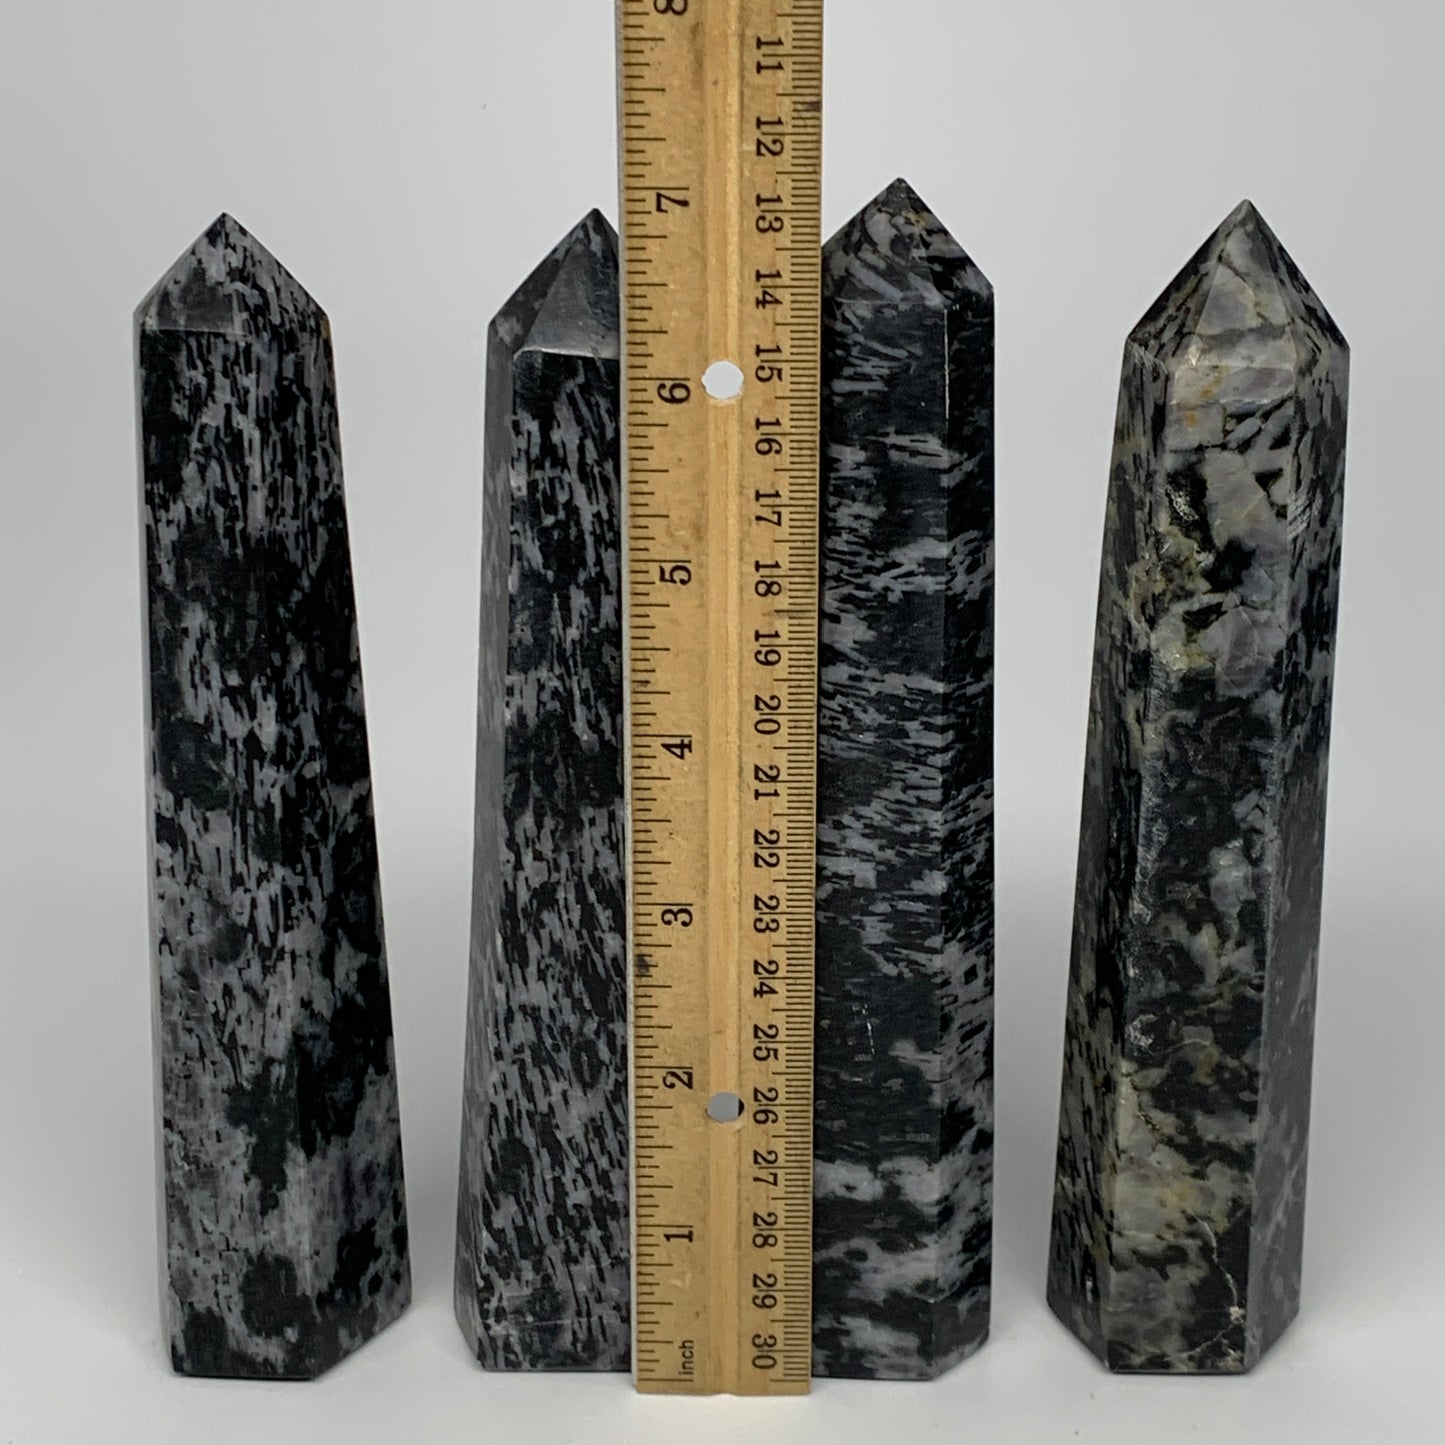 1515 grams, 6.75" -7", 4 pcs, Indigo Gabro Merlinte Towers/Obelisks, B21454